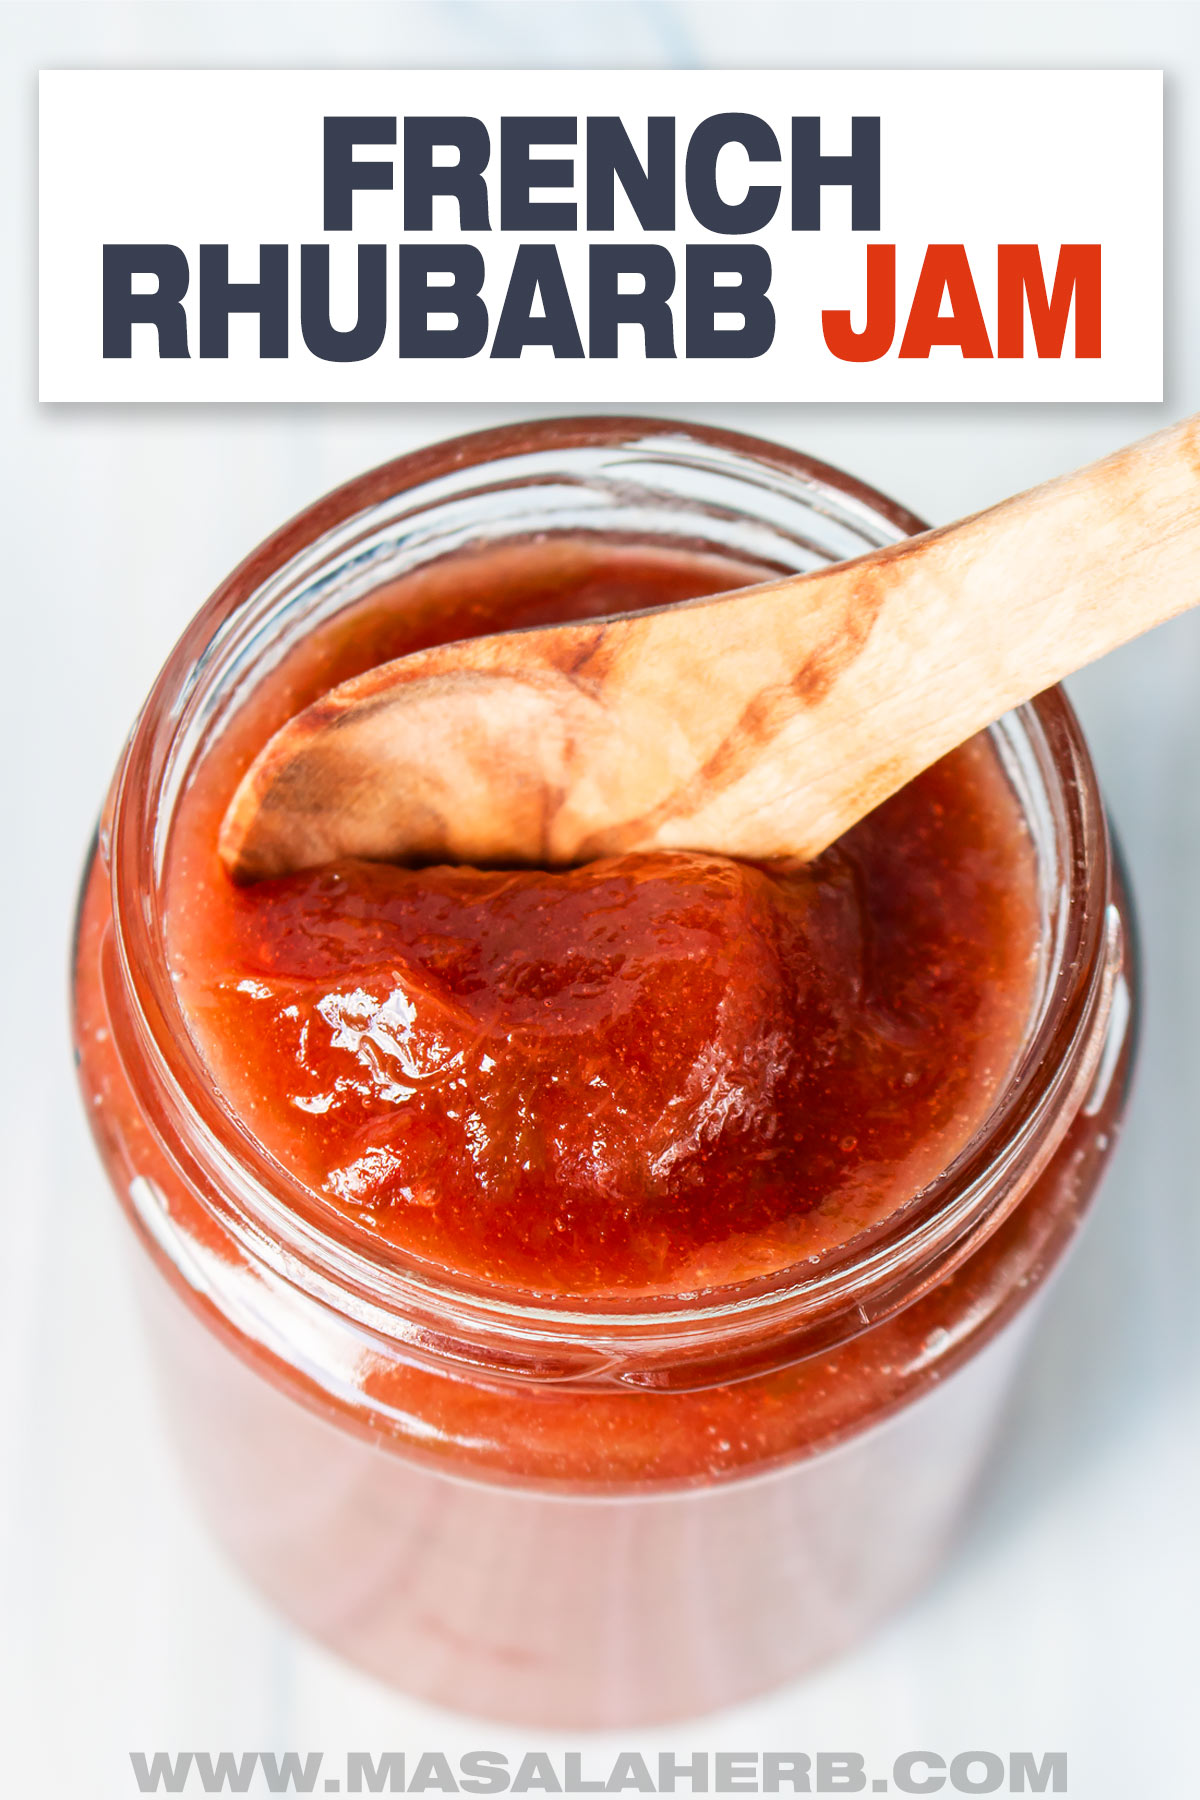 French Rhubarb Jam Recipe cover image